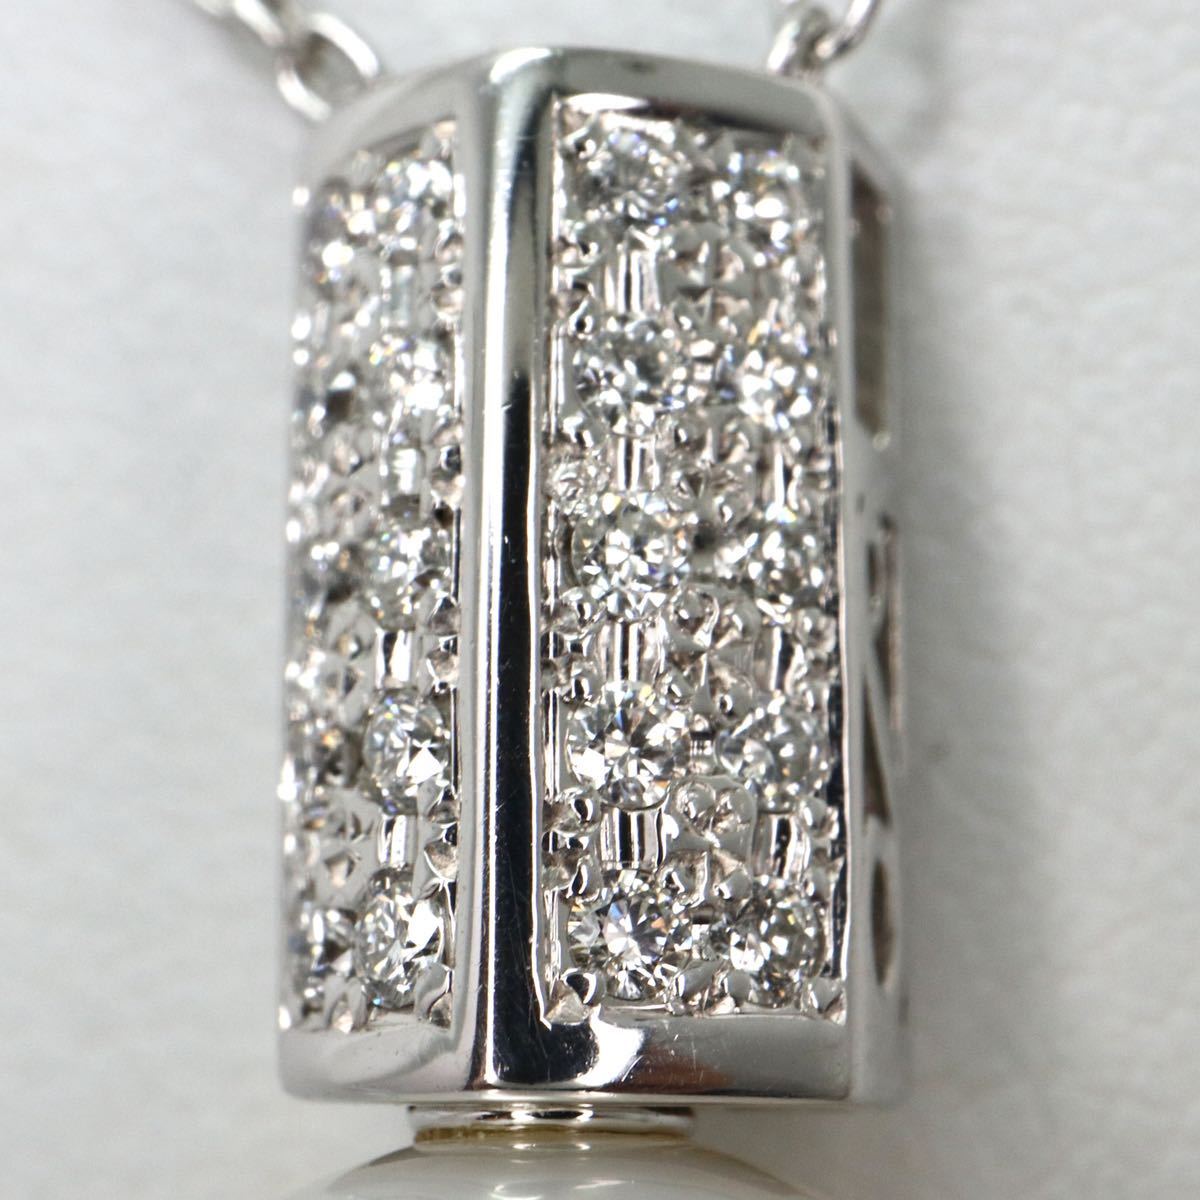 POLA jewelry(ポーラジュエリー)《K18WG天然ダイヤモンド付南洋白蝶真珠ネックレス》N 7.5g 45cm 11.5mm珠 pearl necklace jewelry ED9/EE7_画像4